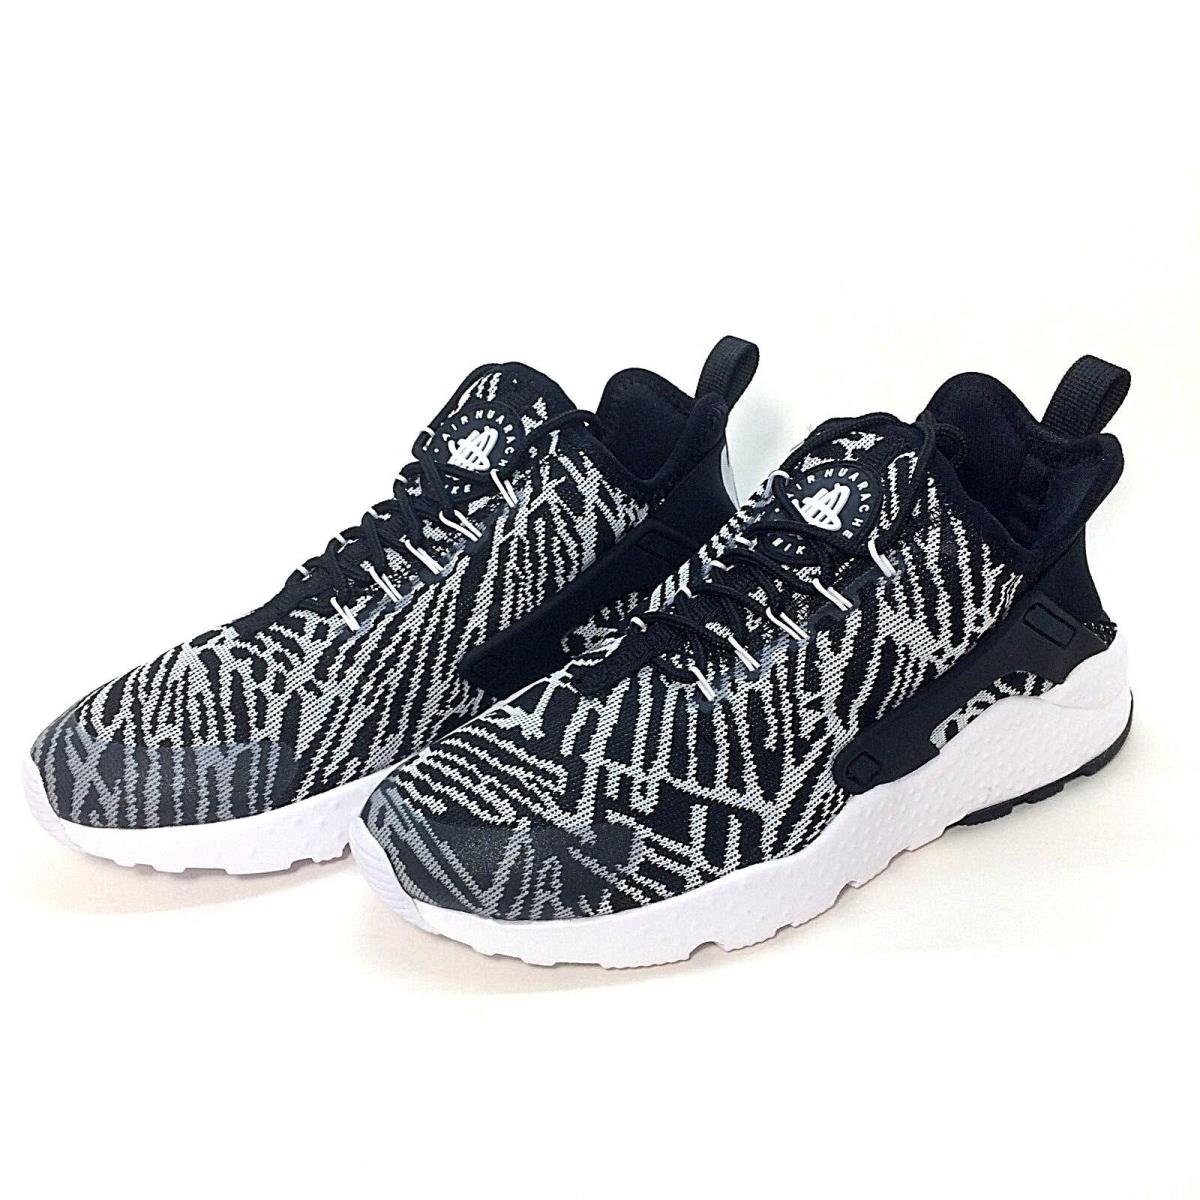 Nike Air Huarache Run Ultra Kjcrd Black Womens Running Shoes 818061 001 SZ 5.5